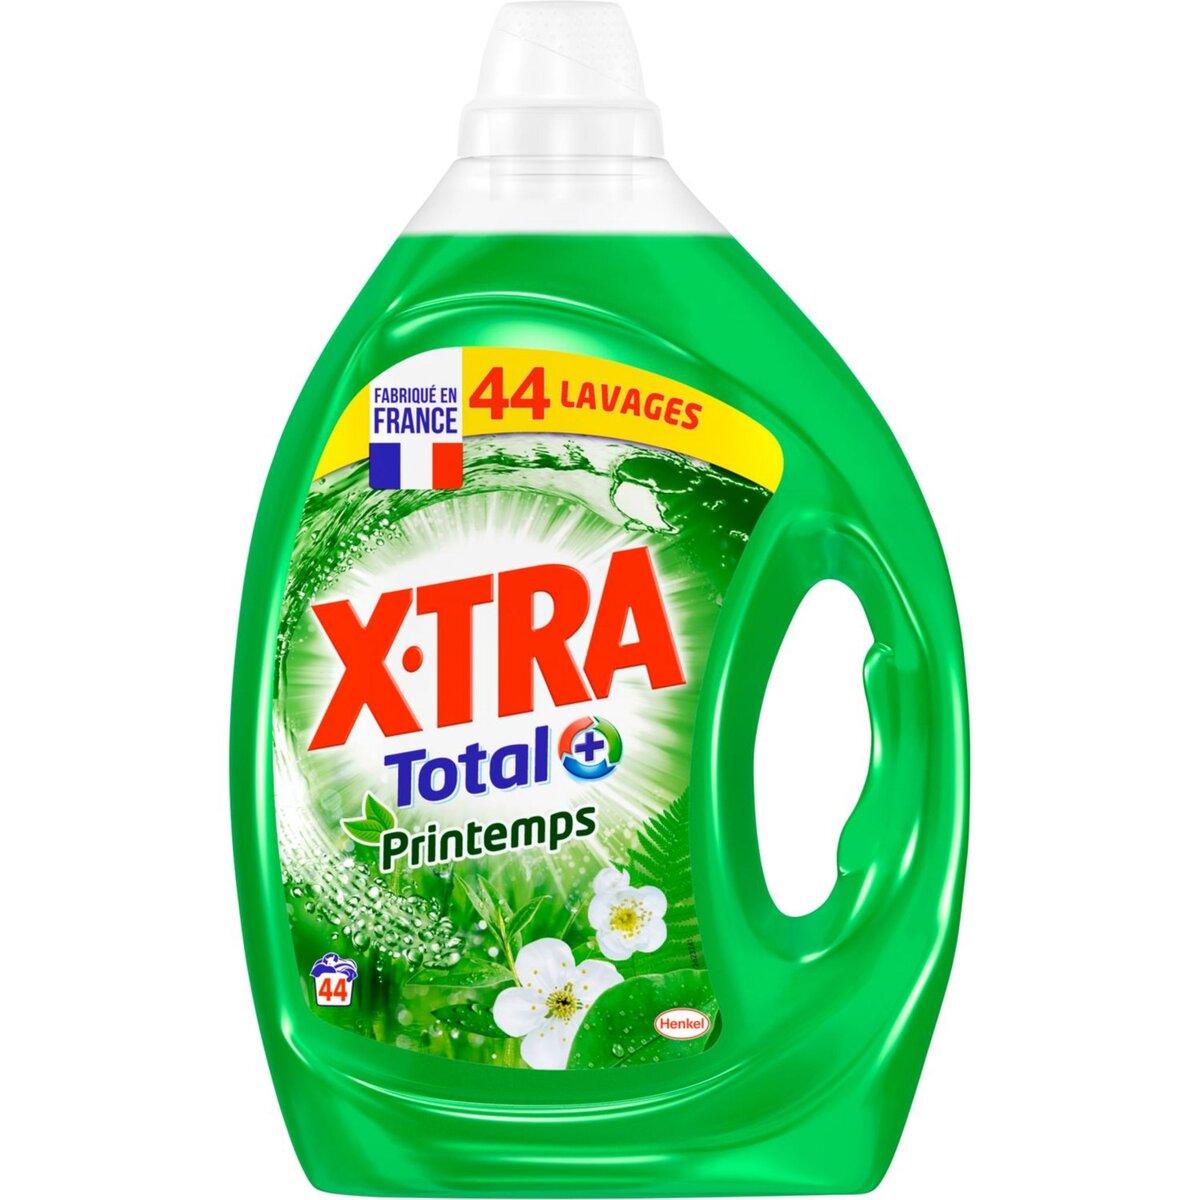 X-TRA Total+ lessive liquide printemps 44 lavages 2,2l